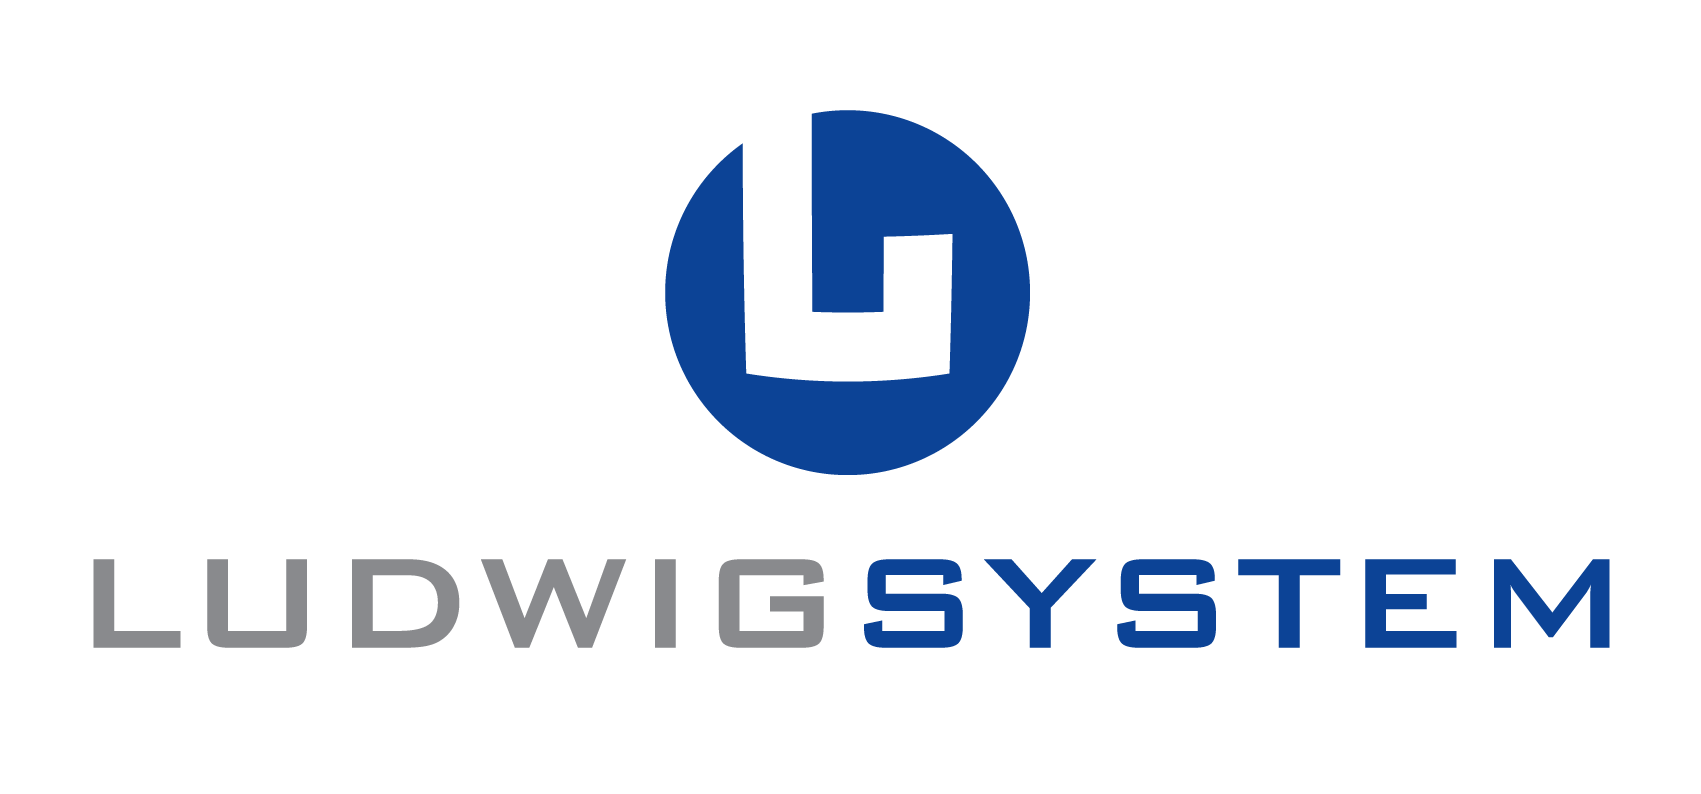 LUDWIG SYSTEM GmbH & Co. KG